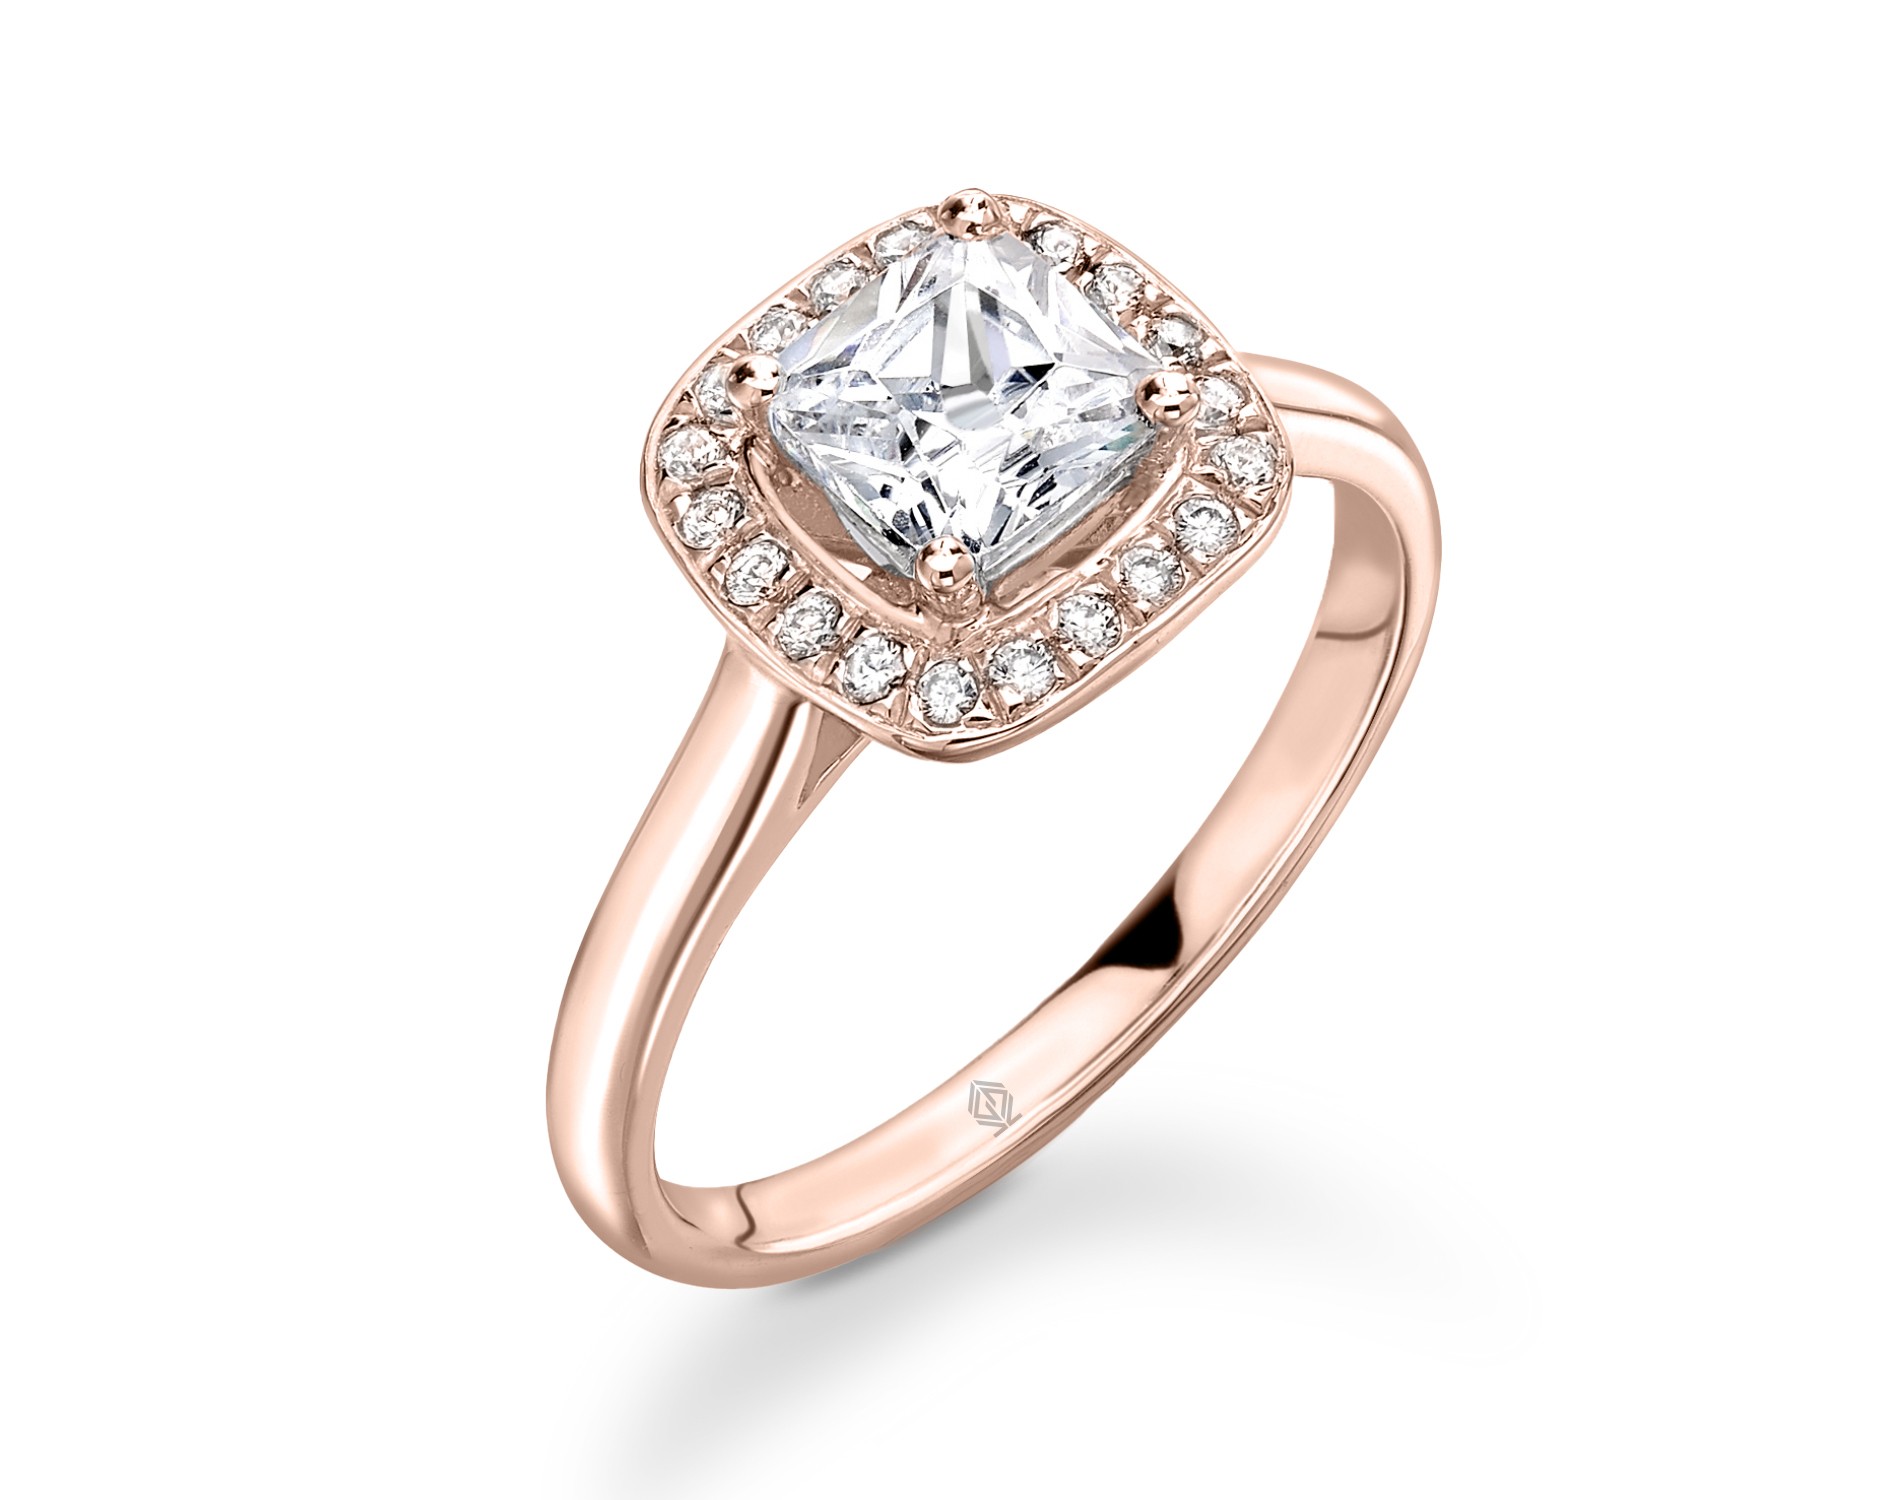 18K ROSE GOLD HALO CUSHION CUT DIAMOND ENGAGEMENT RING